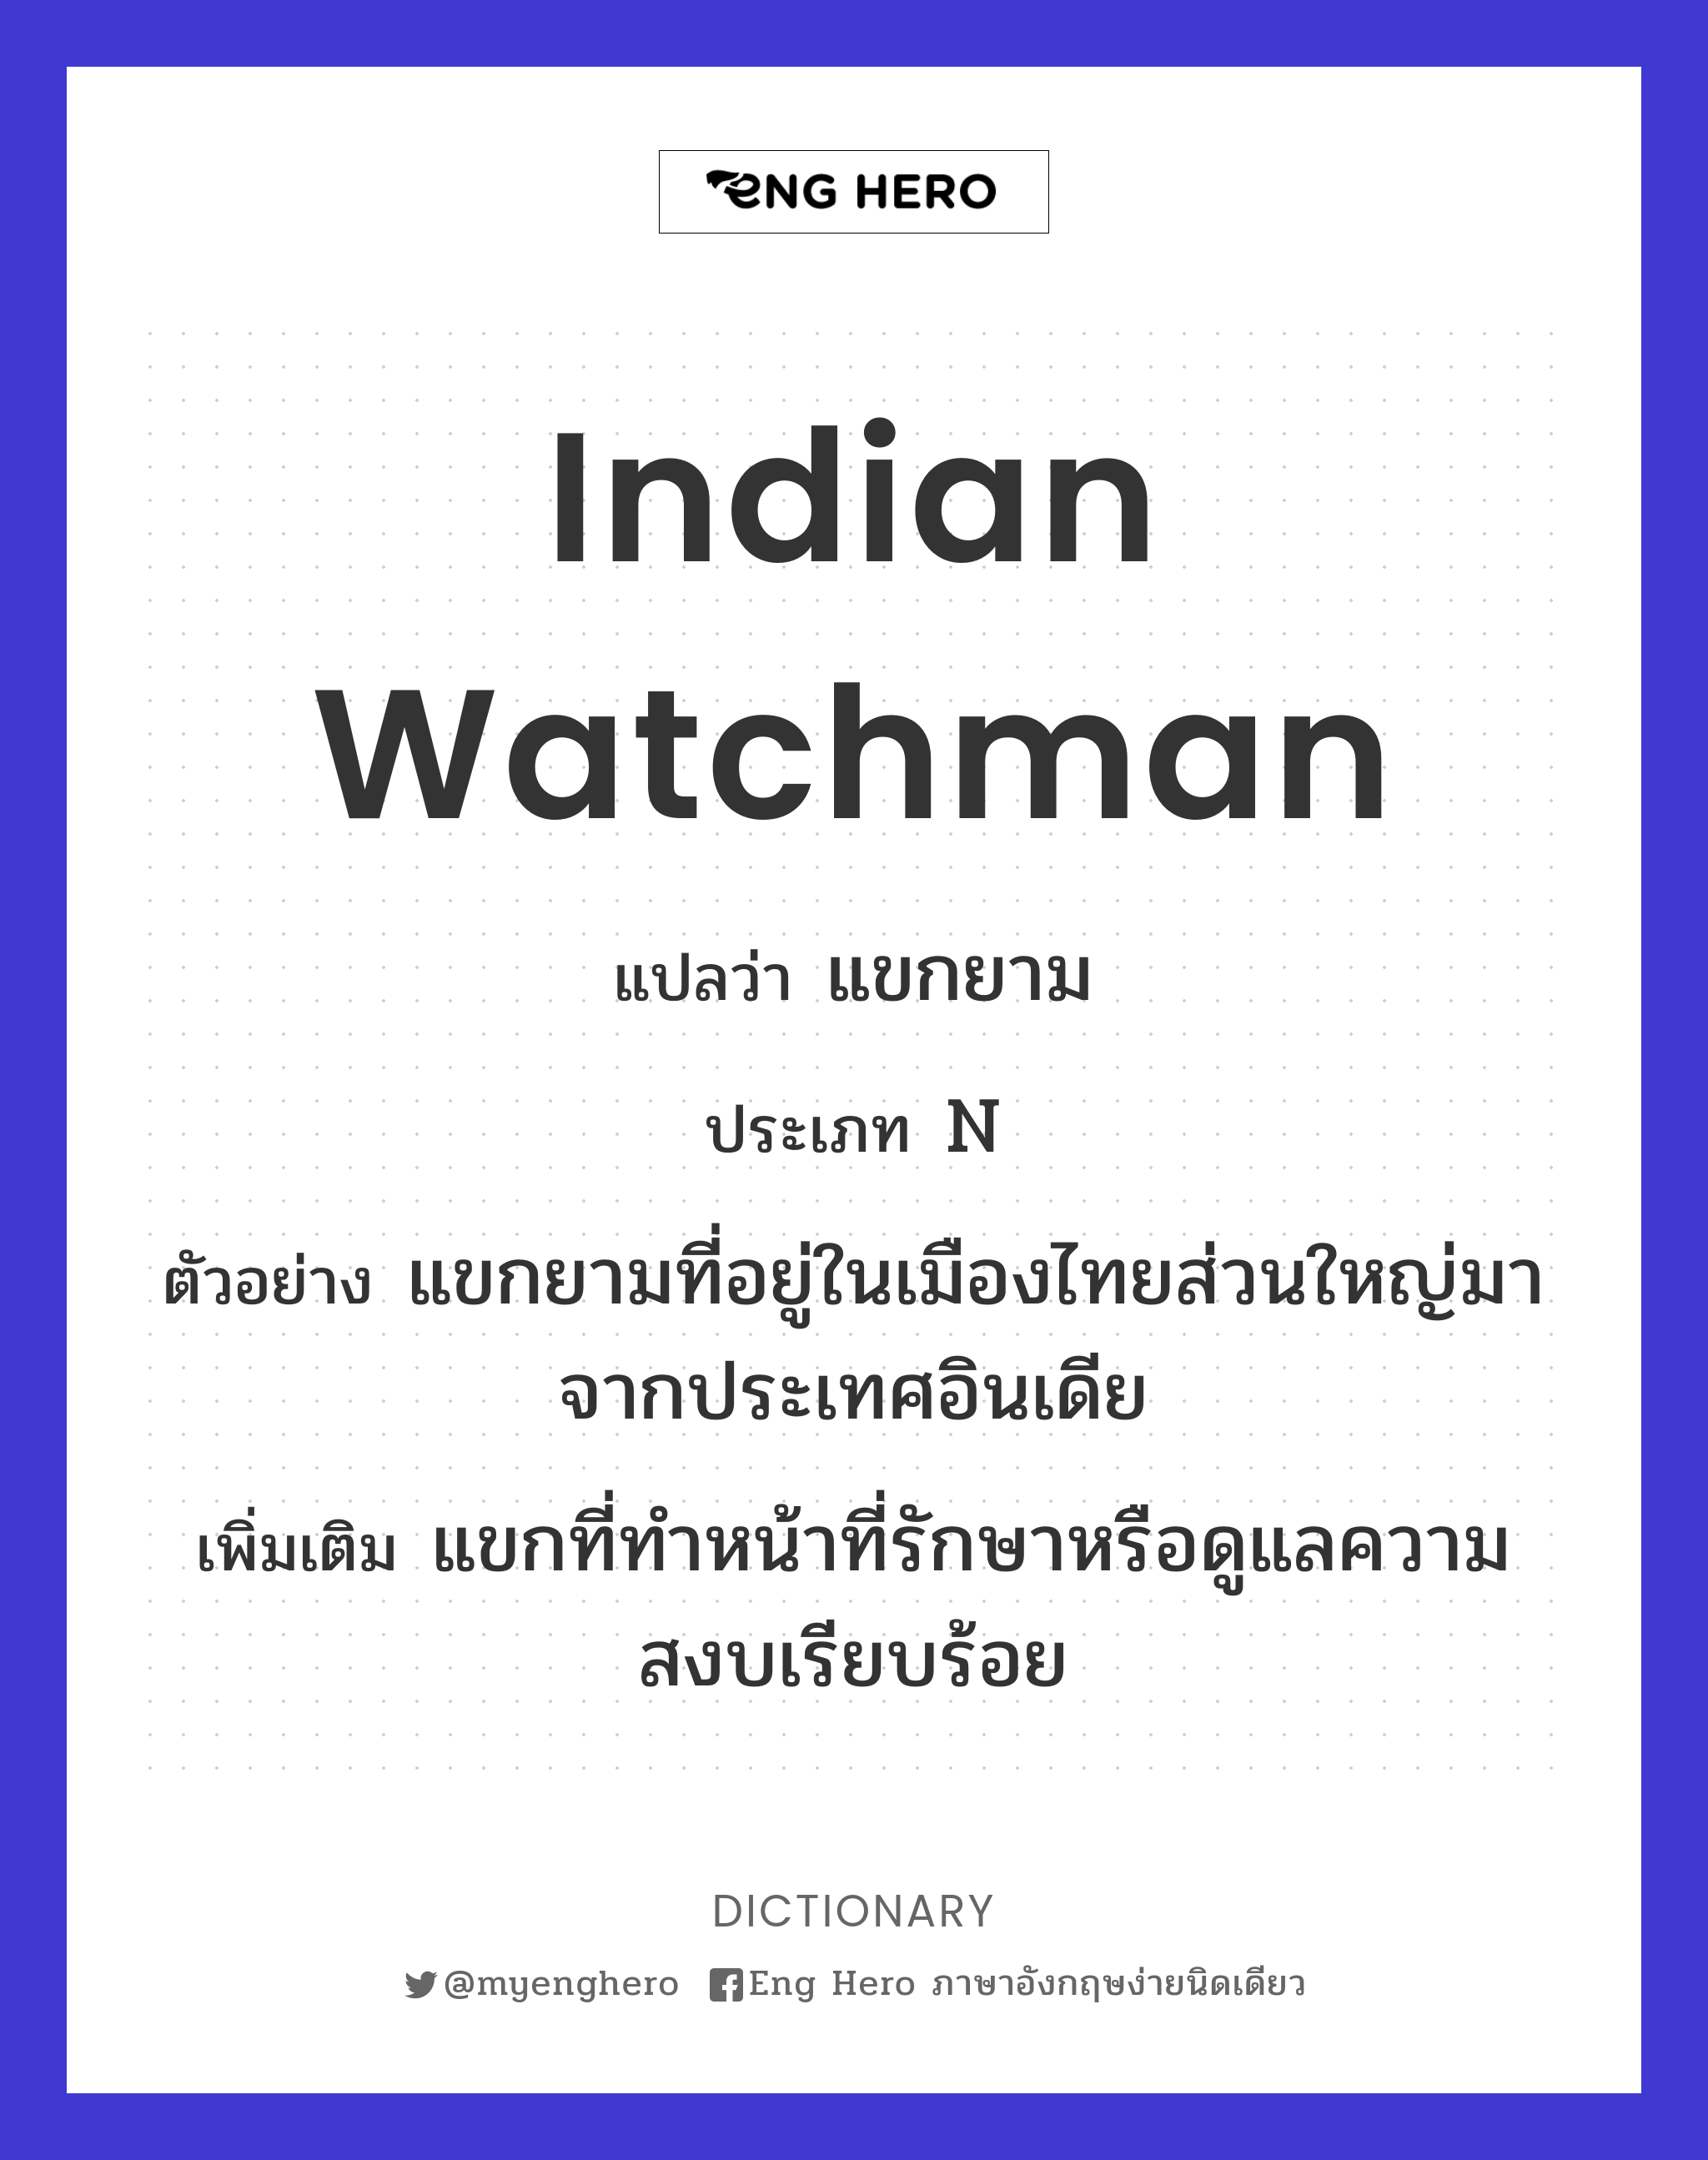 Indian watchman